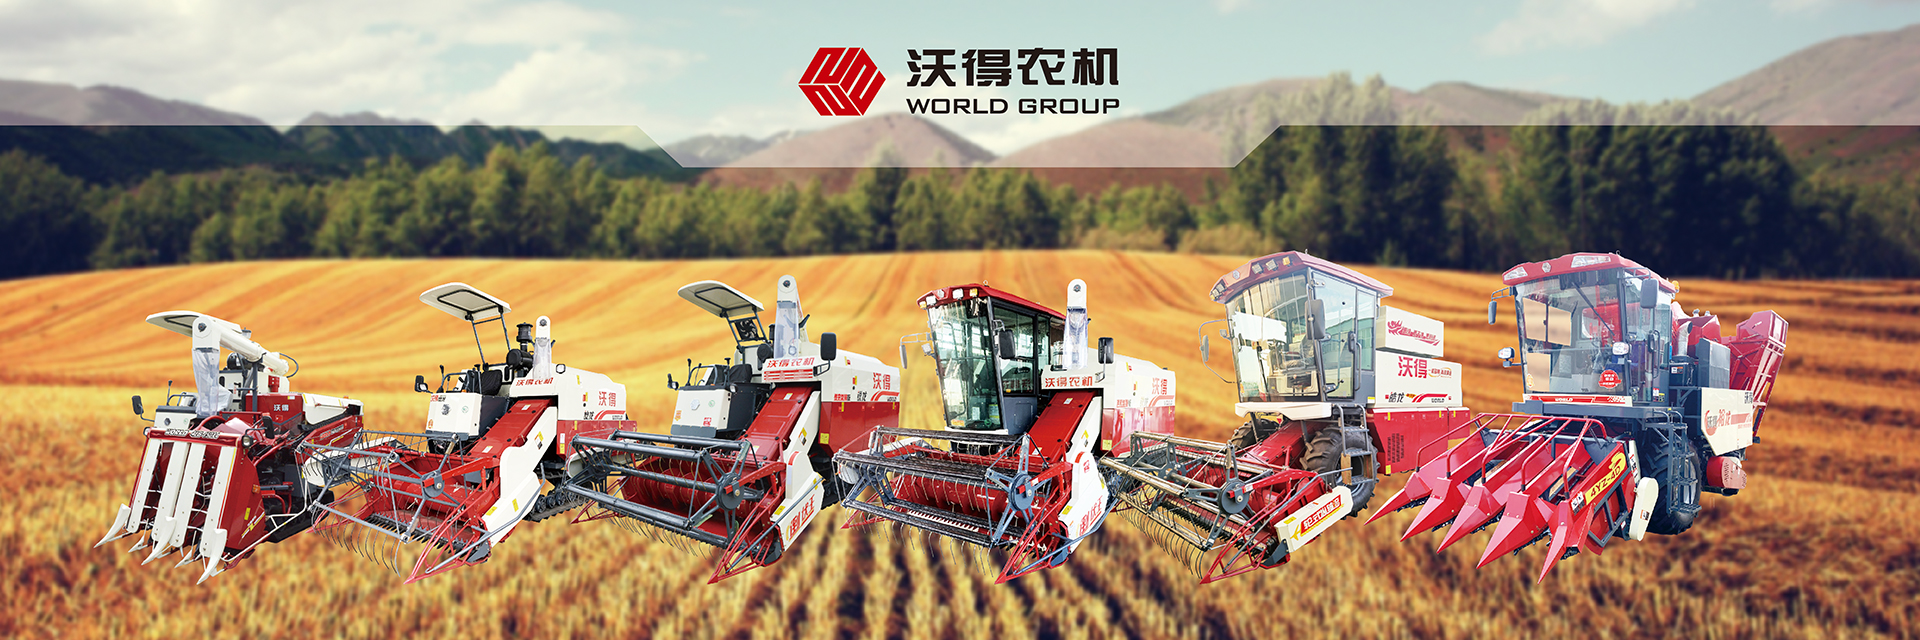 Harvesting Machine-banner